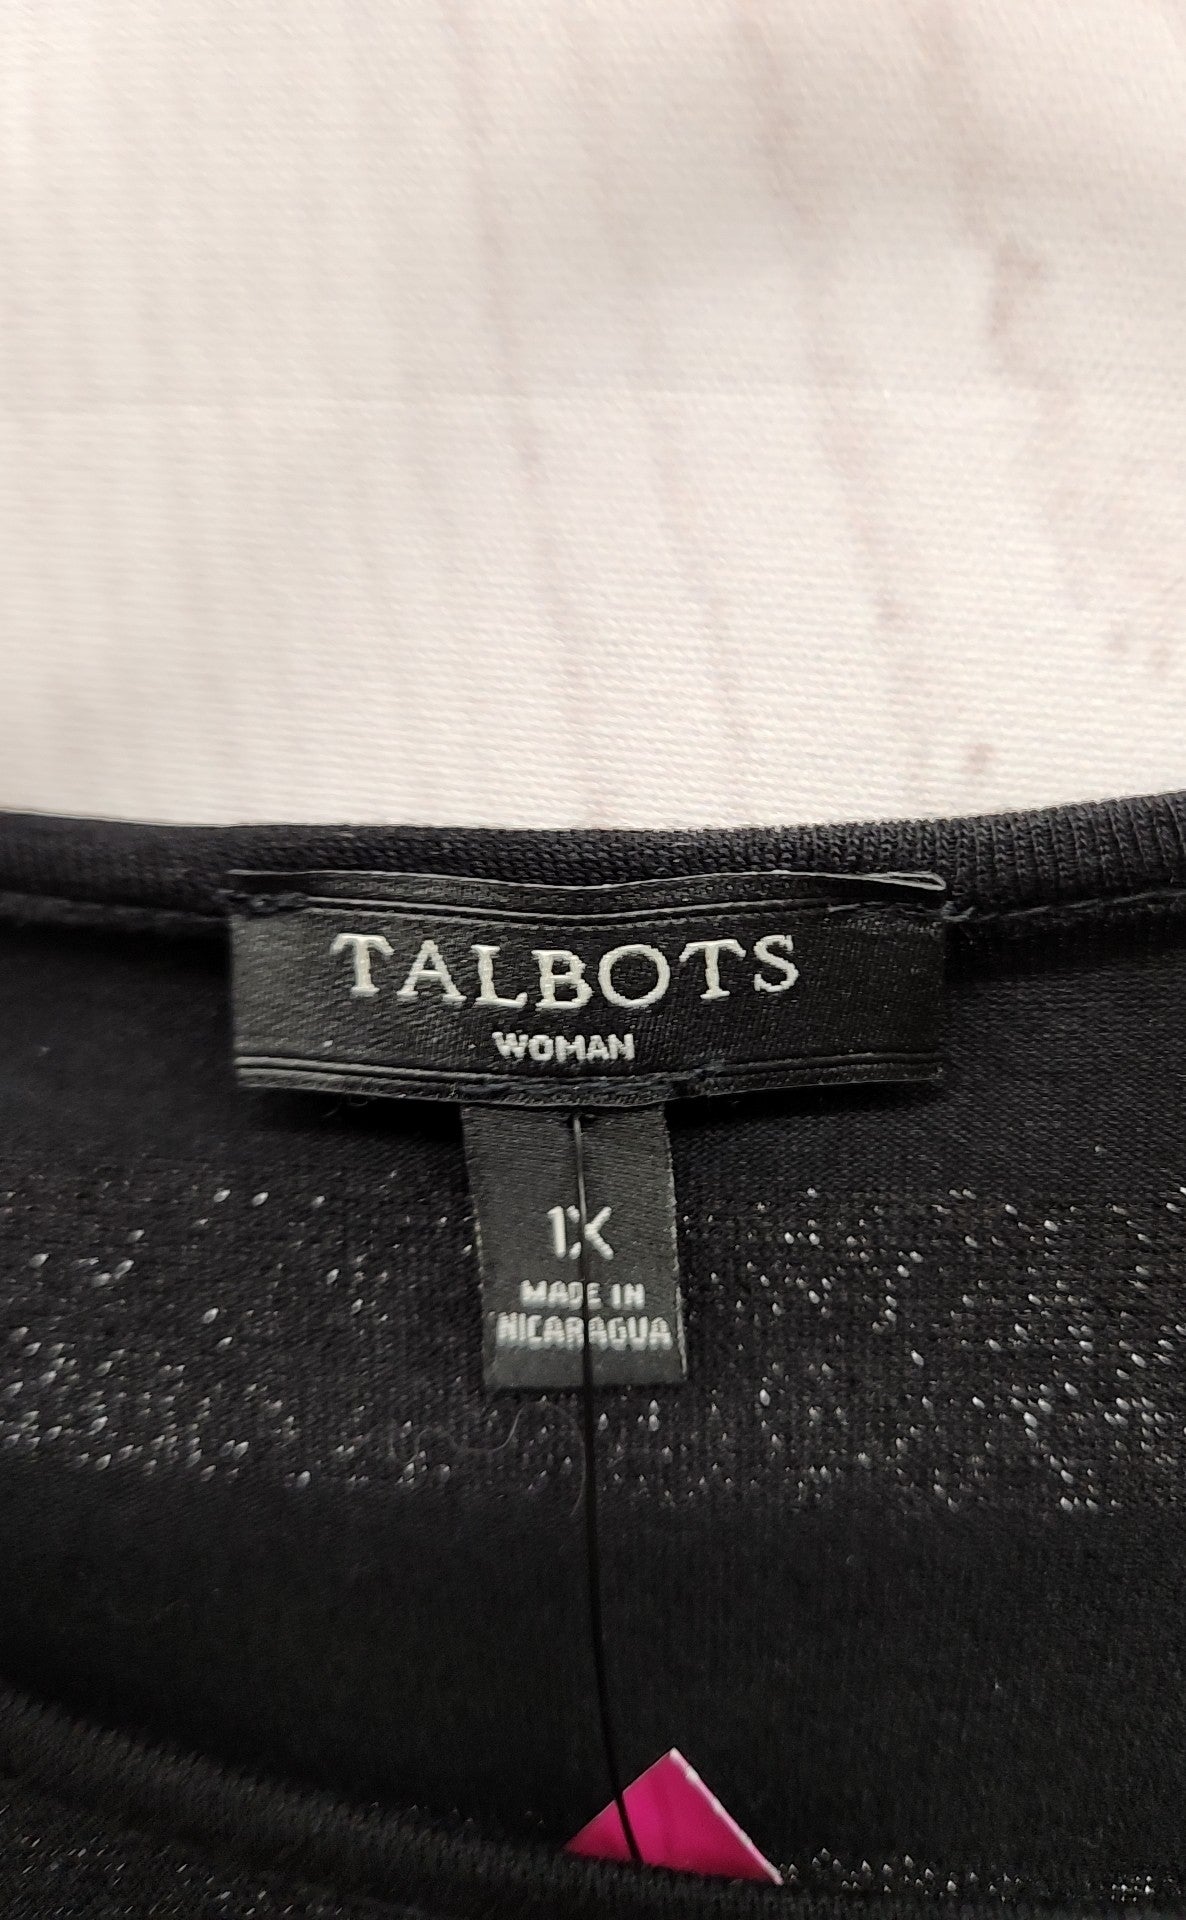 Talbots Women's Size 1X Black Long Sleeve Top